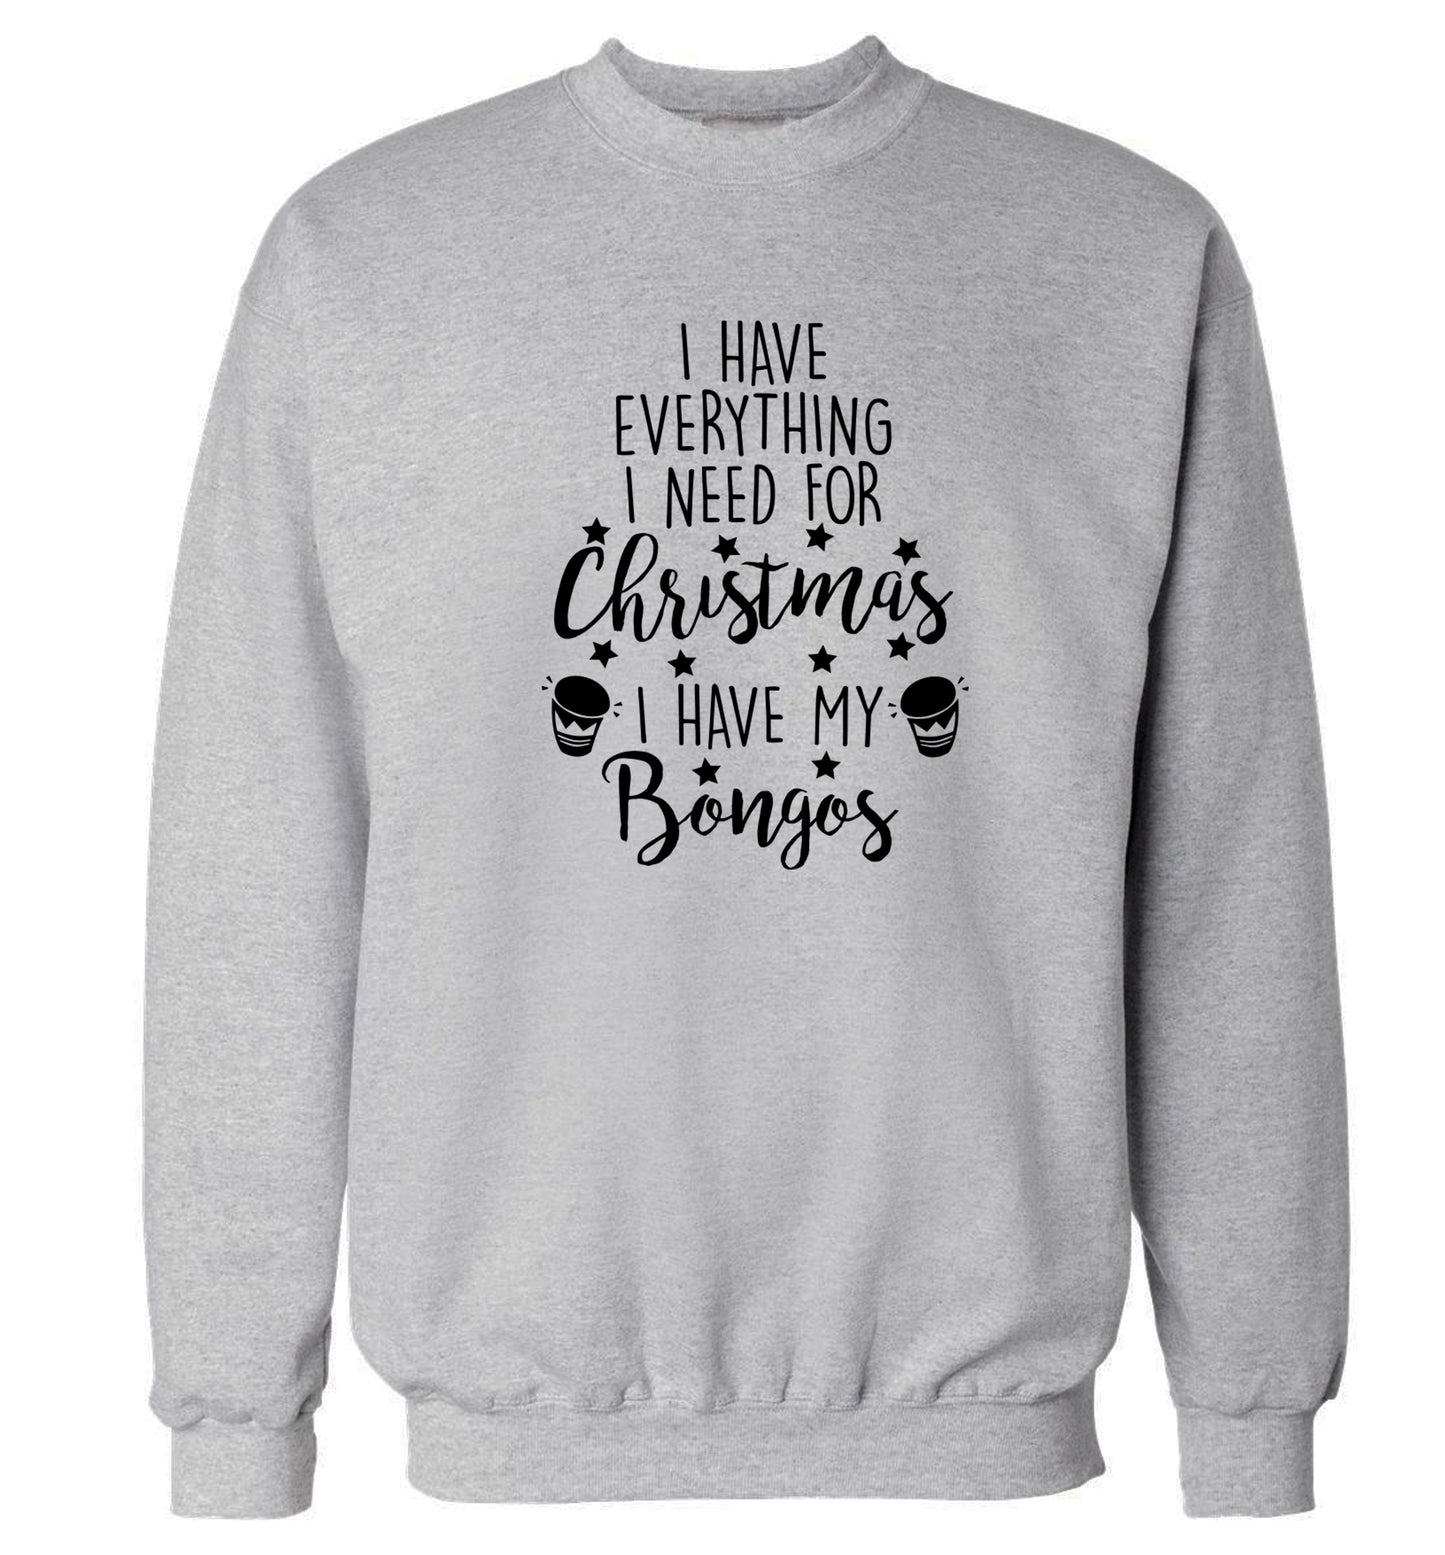 I have everything I need for Christmas I have my bongos! Adult's unisex grey Sweater 2XL